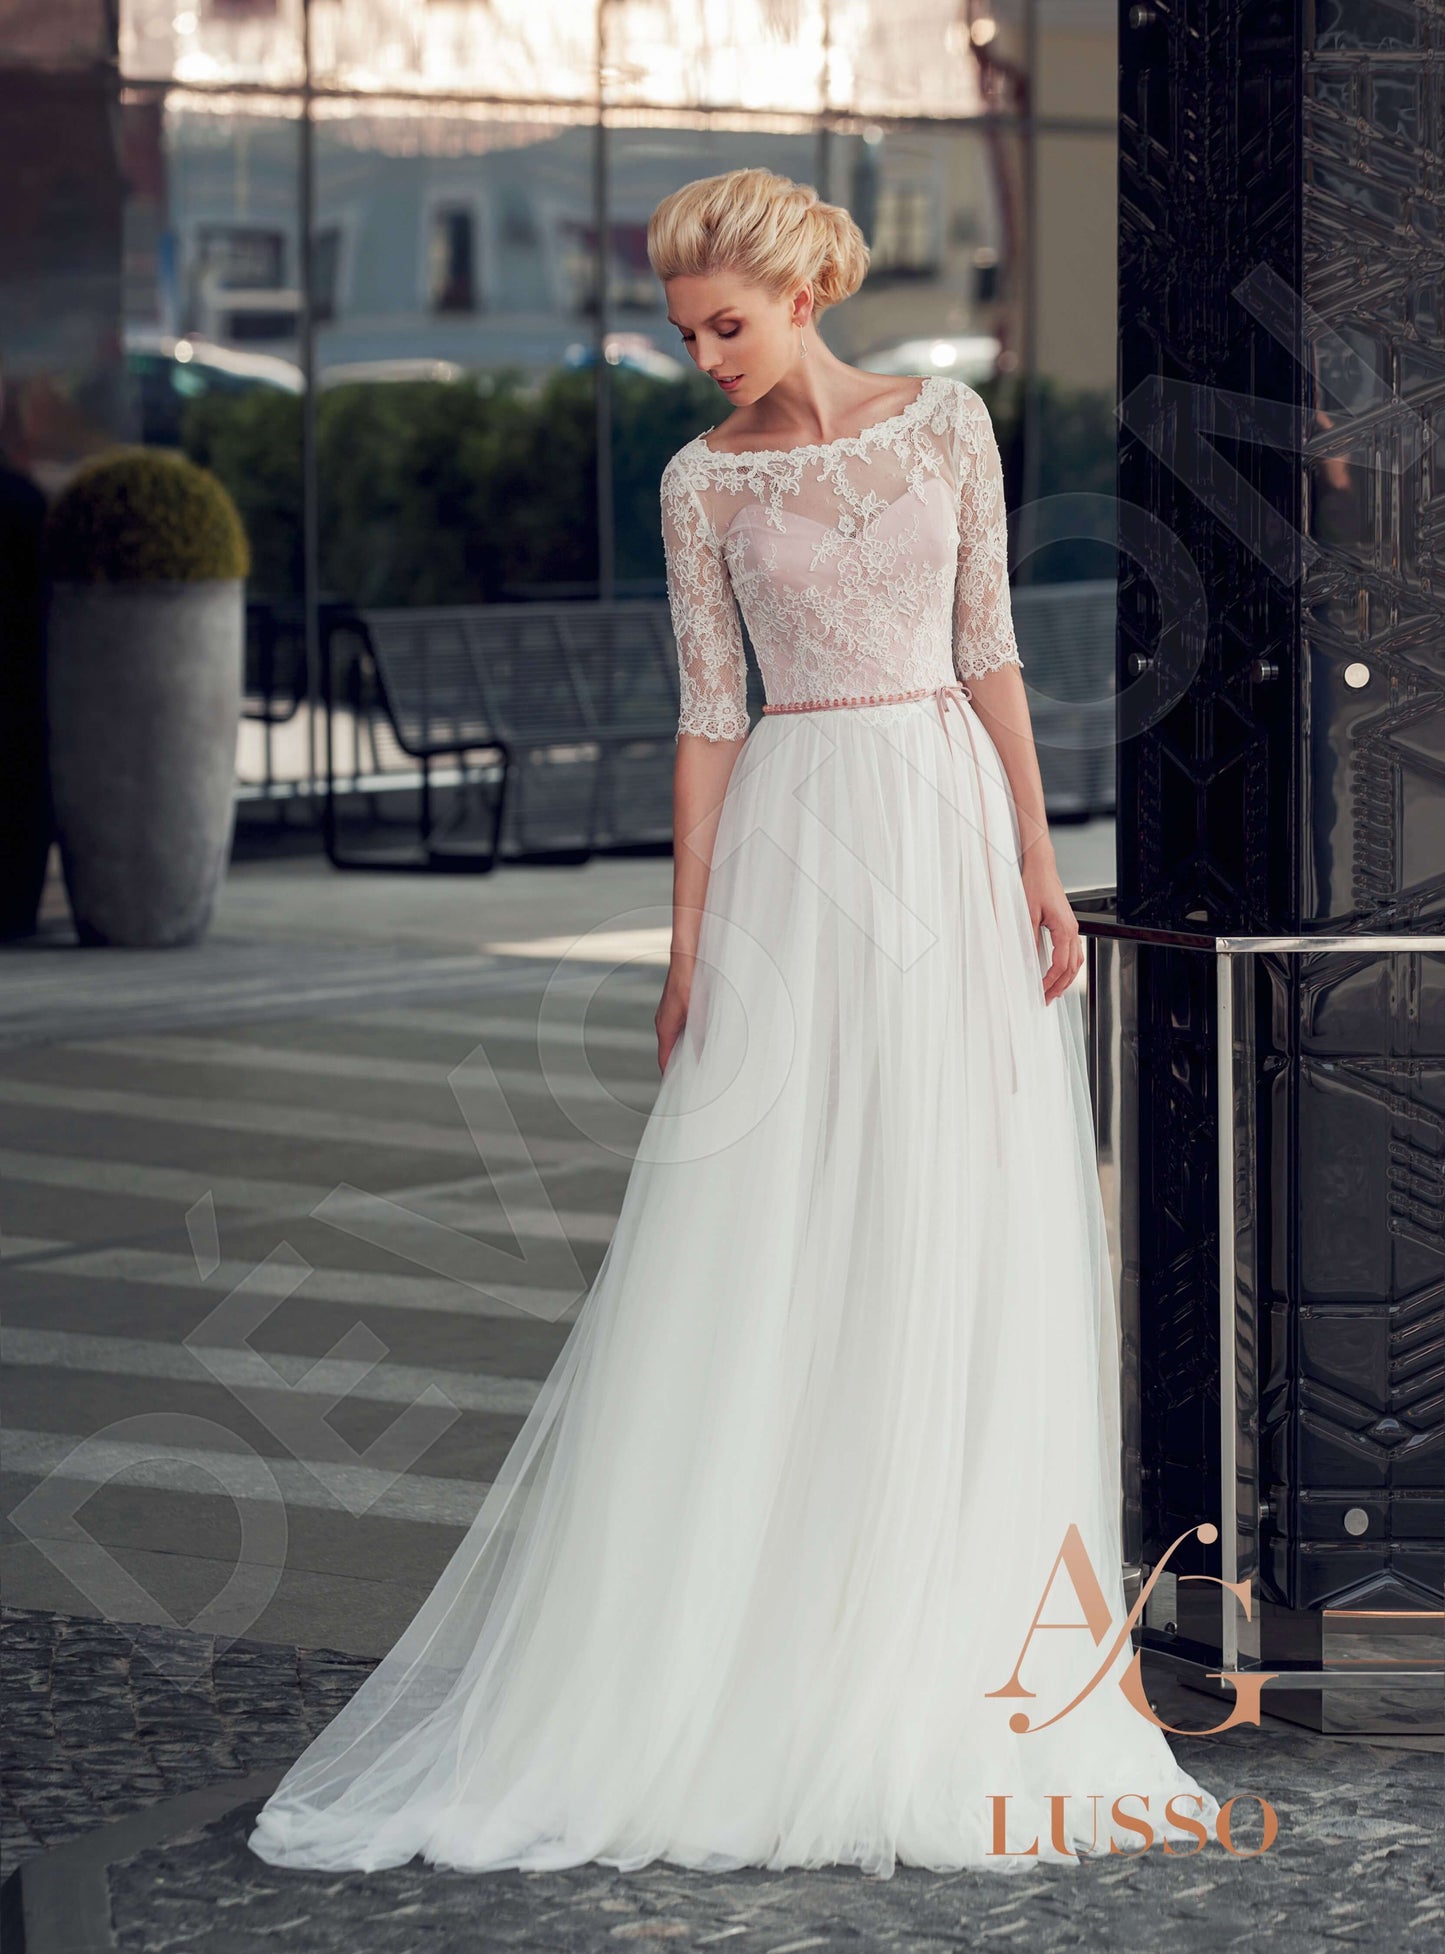 Minala Open back A-line Strapless Wedding Dress Front